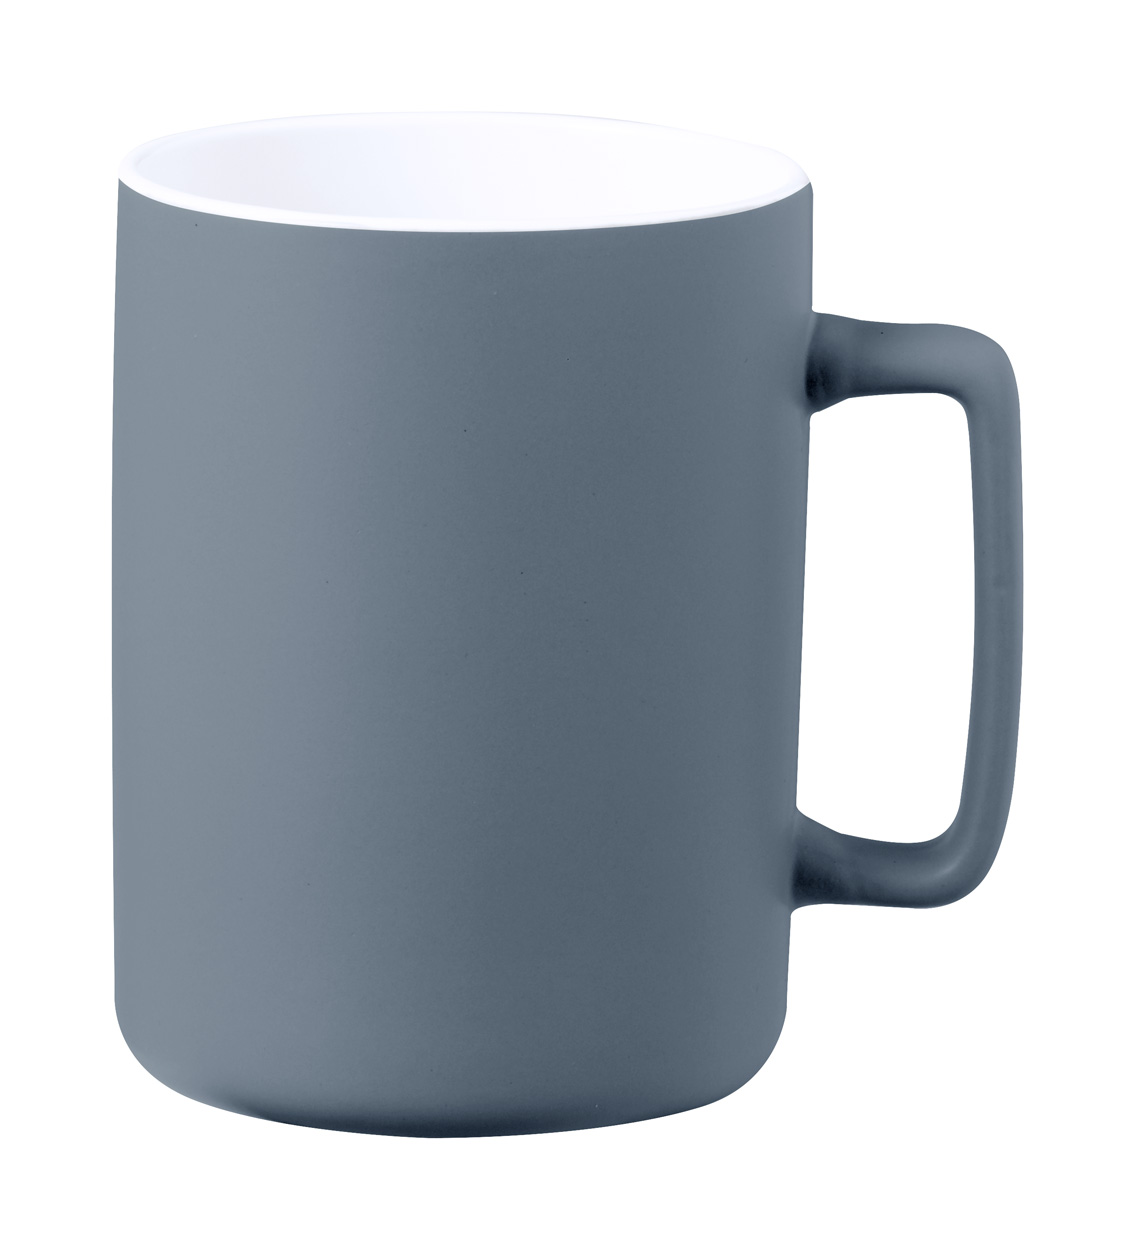 Kubaya mug - grey